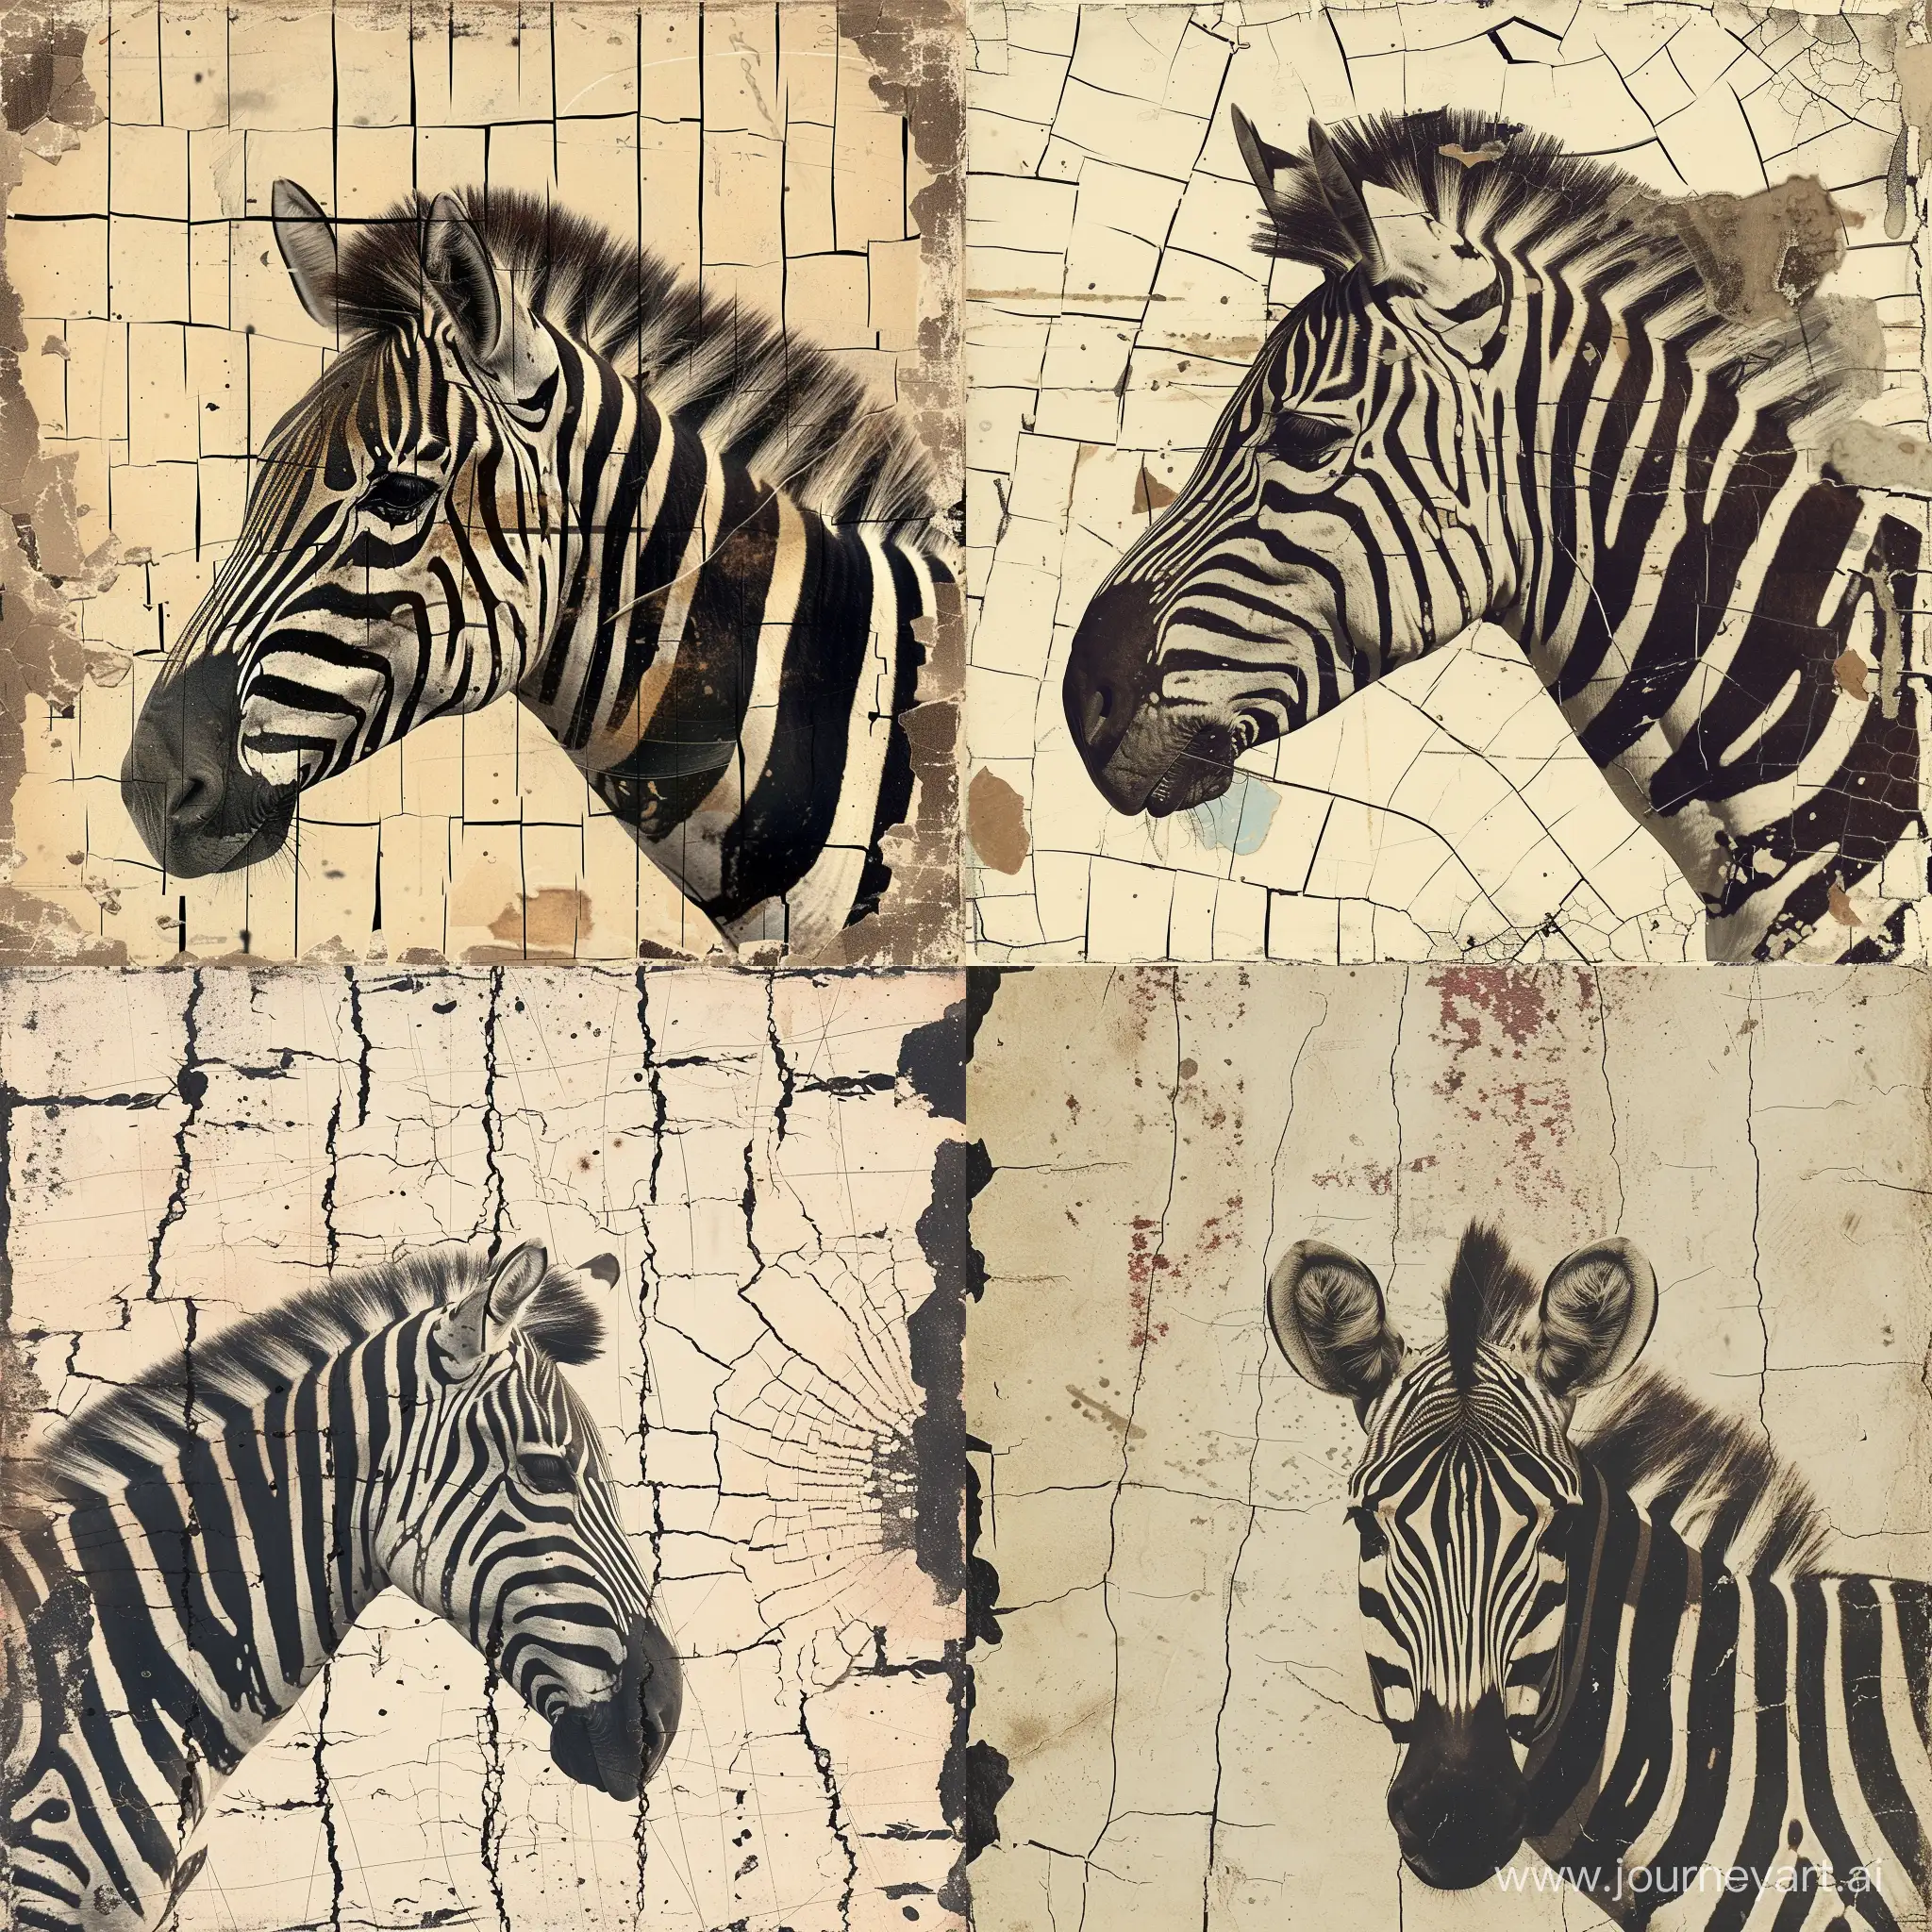 Surreal-Double-Exposure-Zebra-on-Cracked-Paper-Postcard-Art